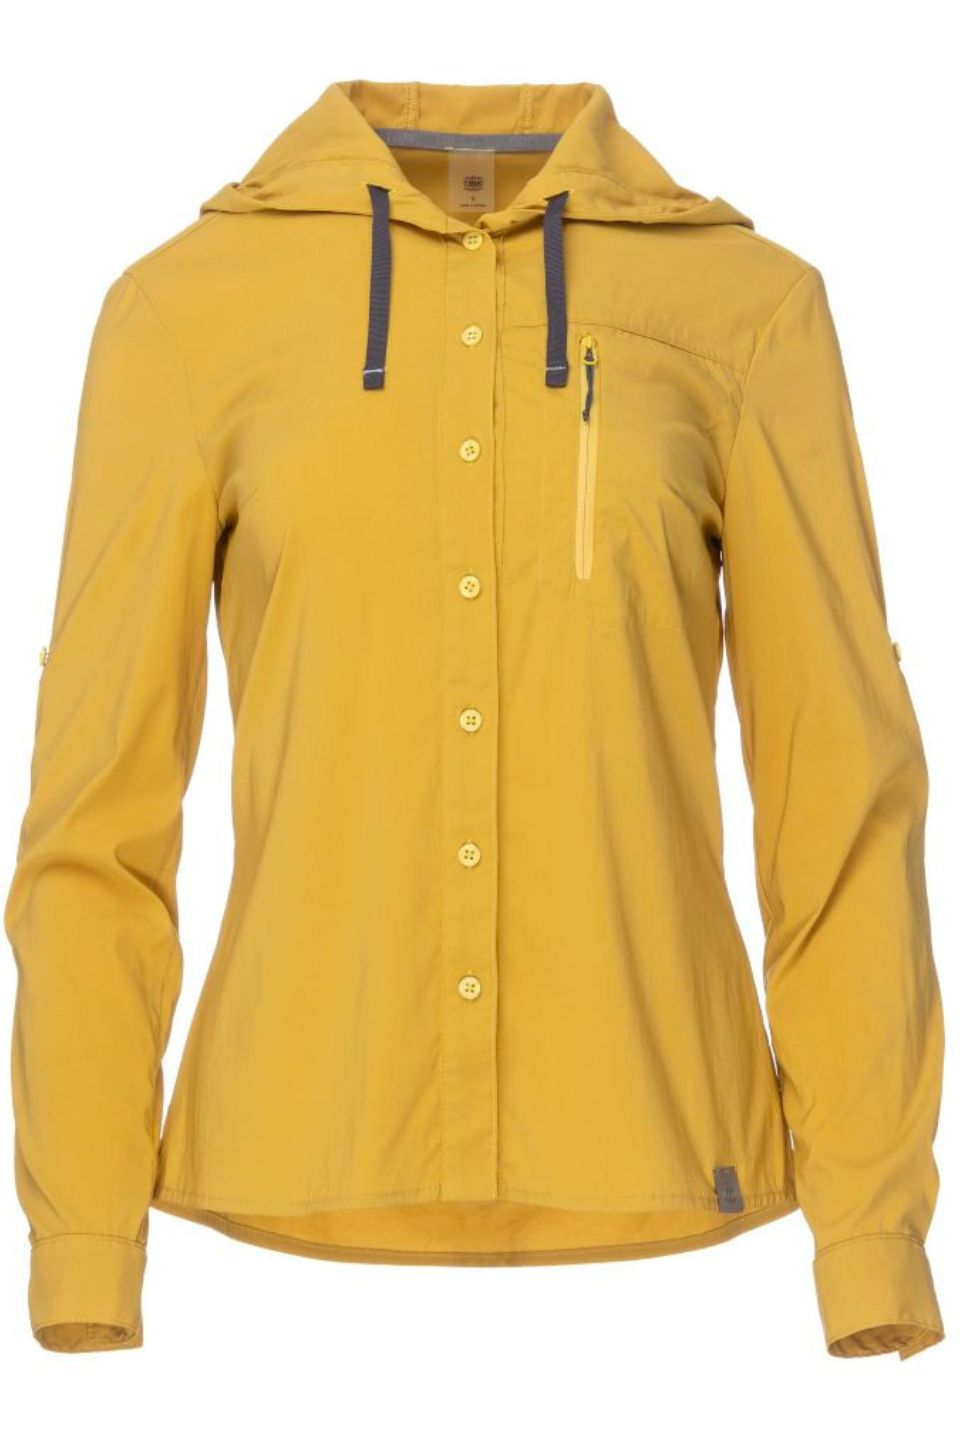 Рубашка женская Turbat Maya Hood Wmn lemon curry yellow